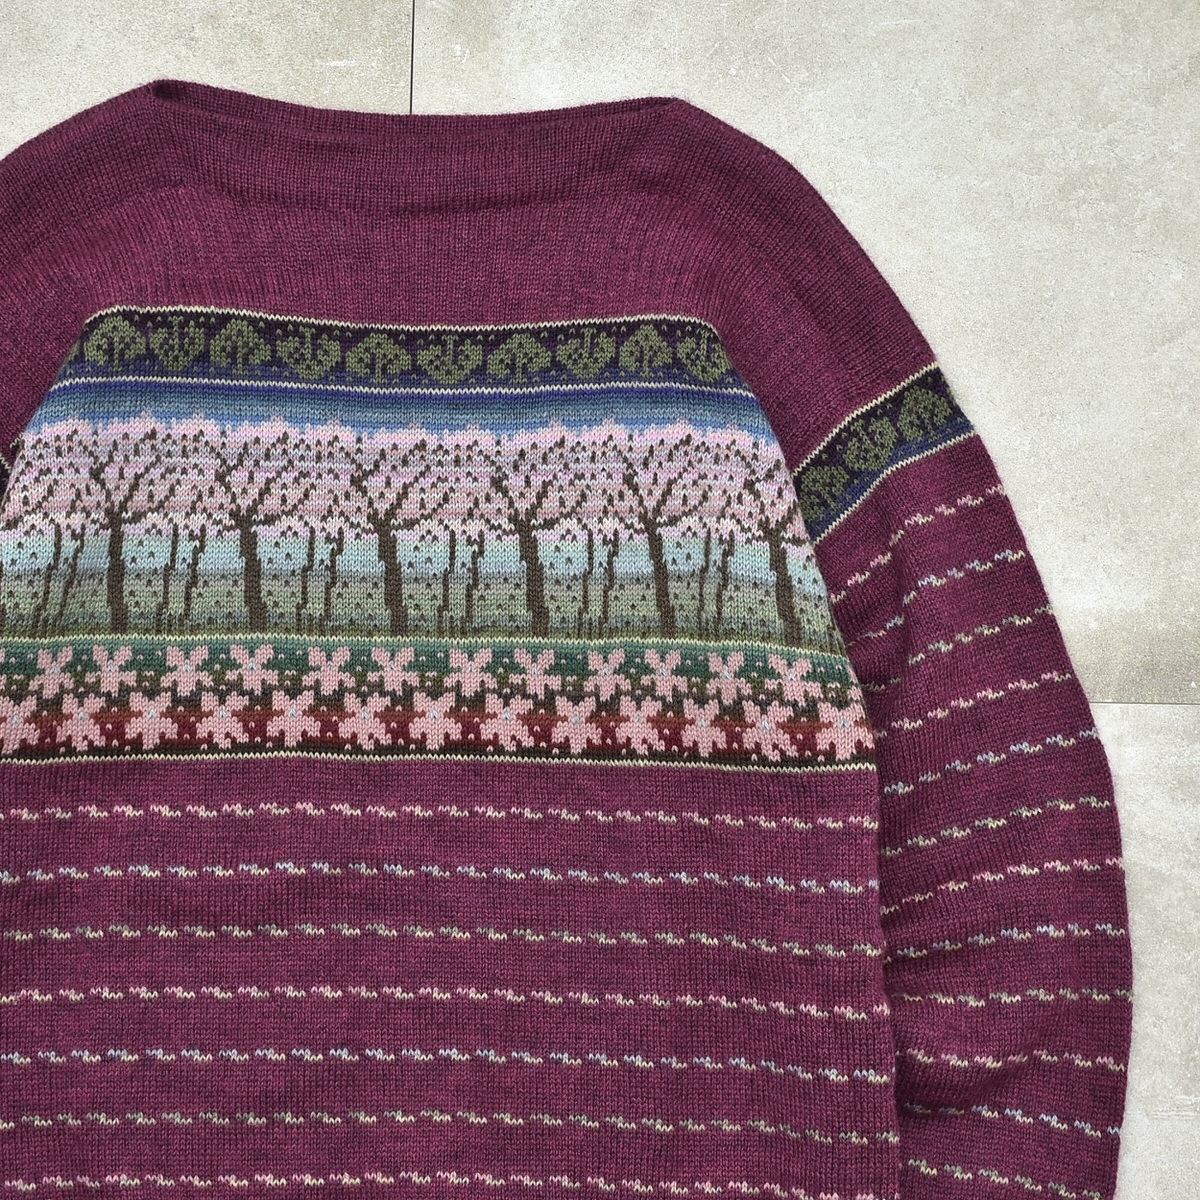 SAKURA jacquard design hand made knitメンズ XL相当 フィンランド製 Liisakoo 桜 デザイン セーター